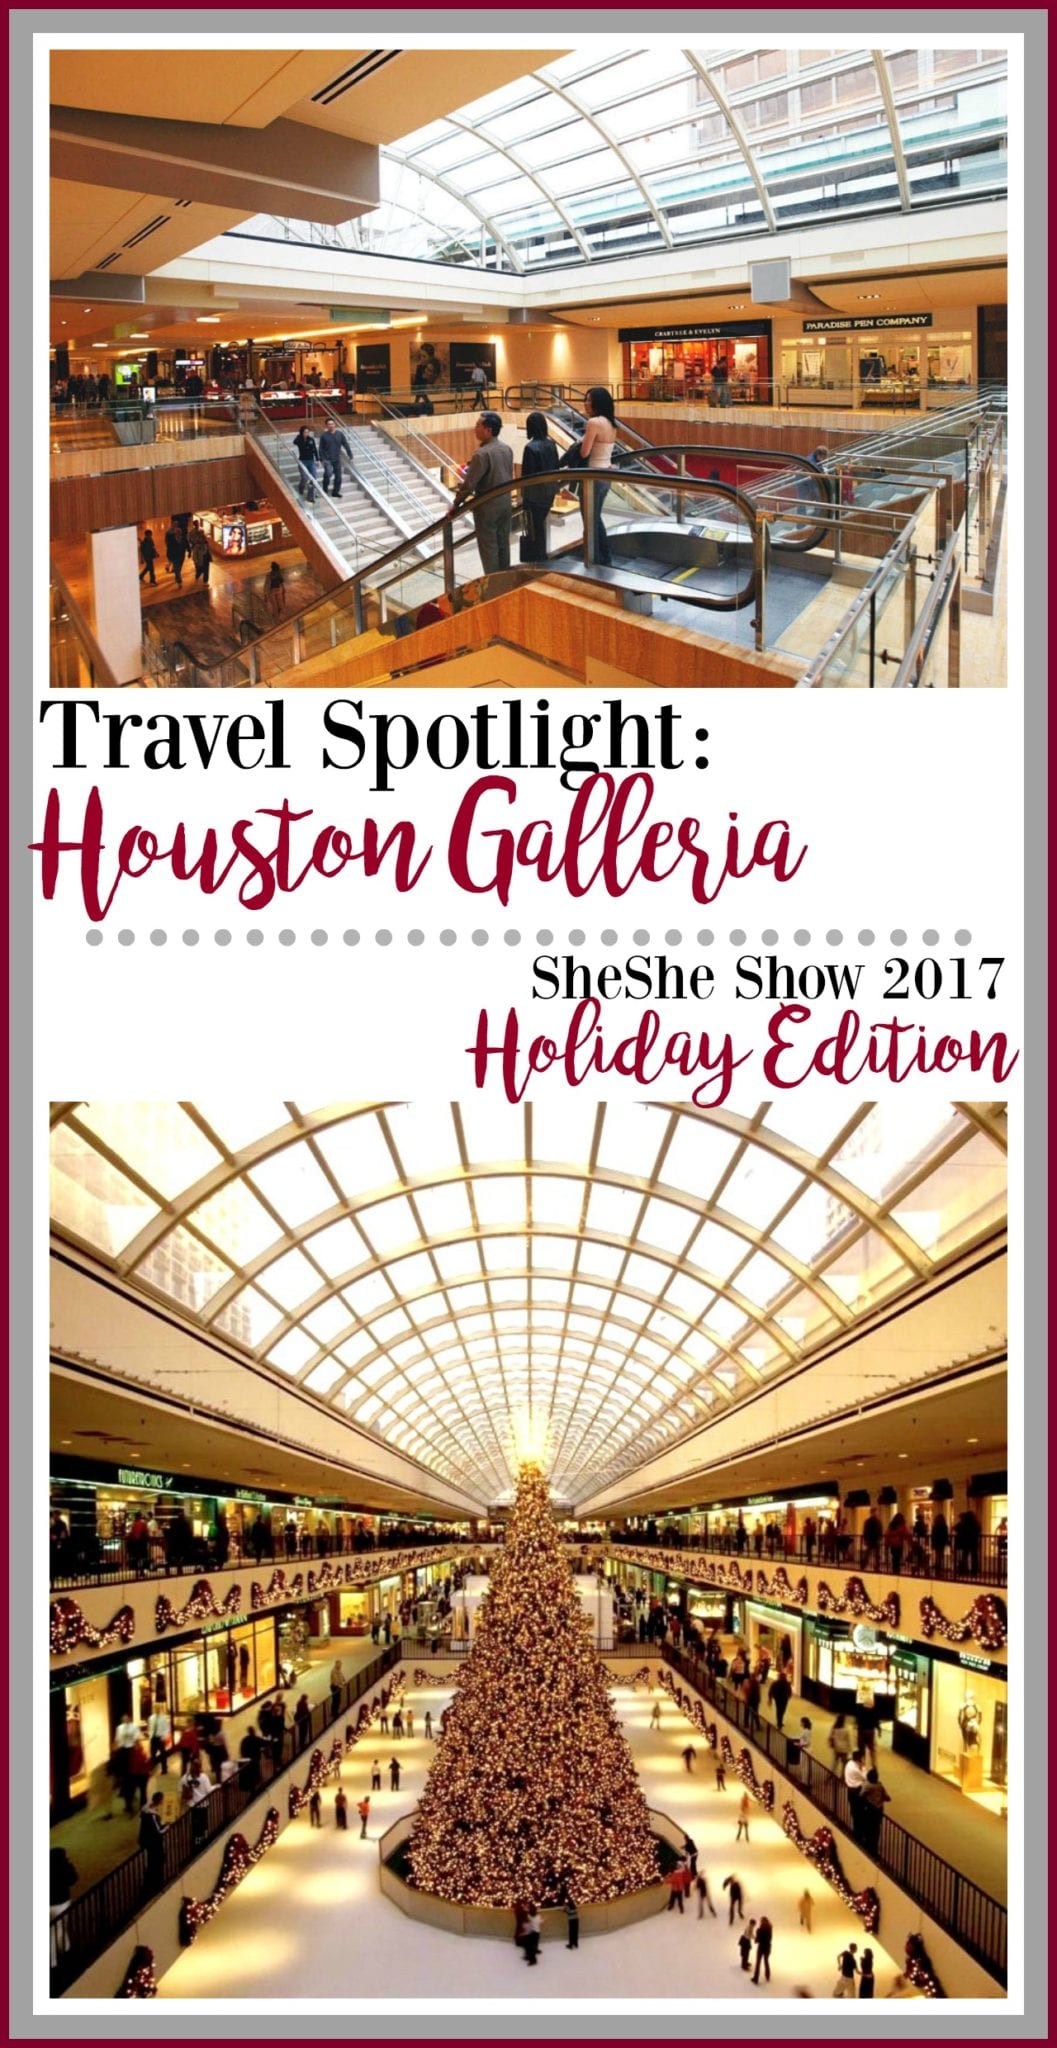 Galleria, houston, travel, shopping